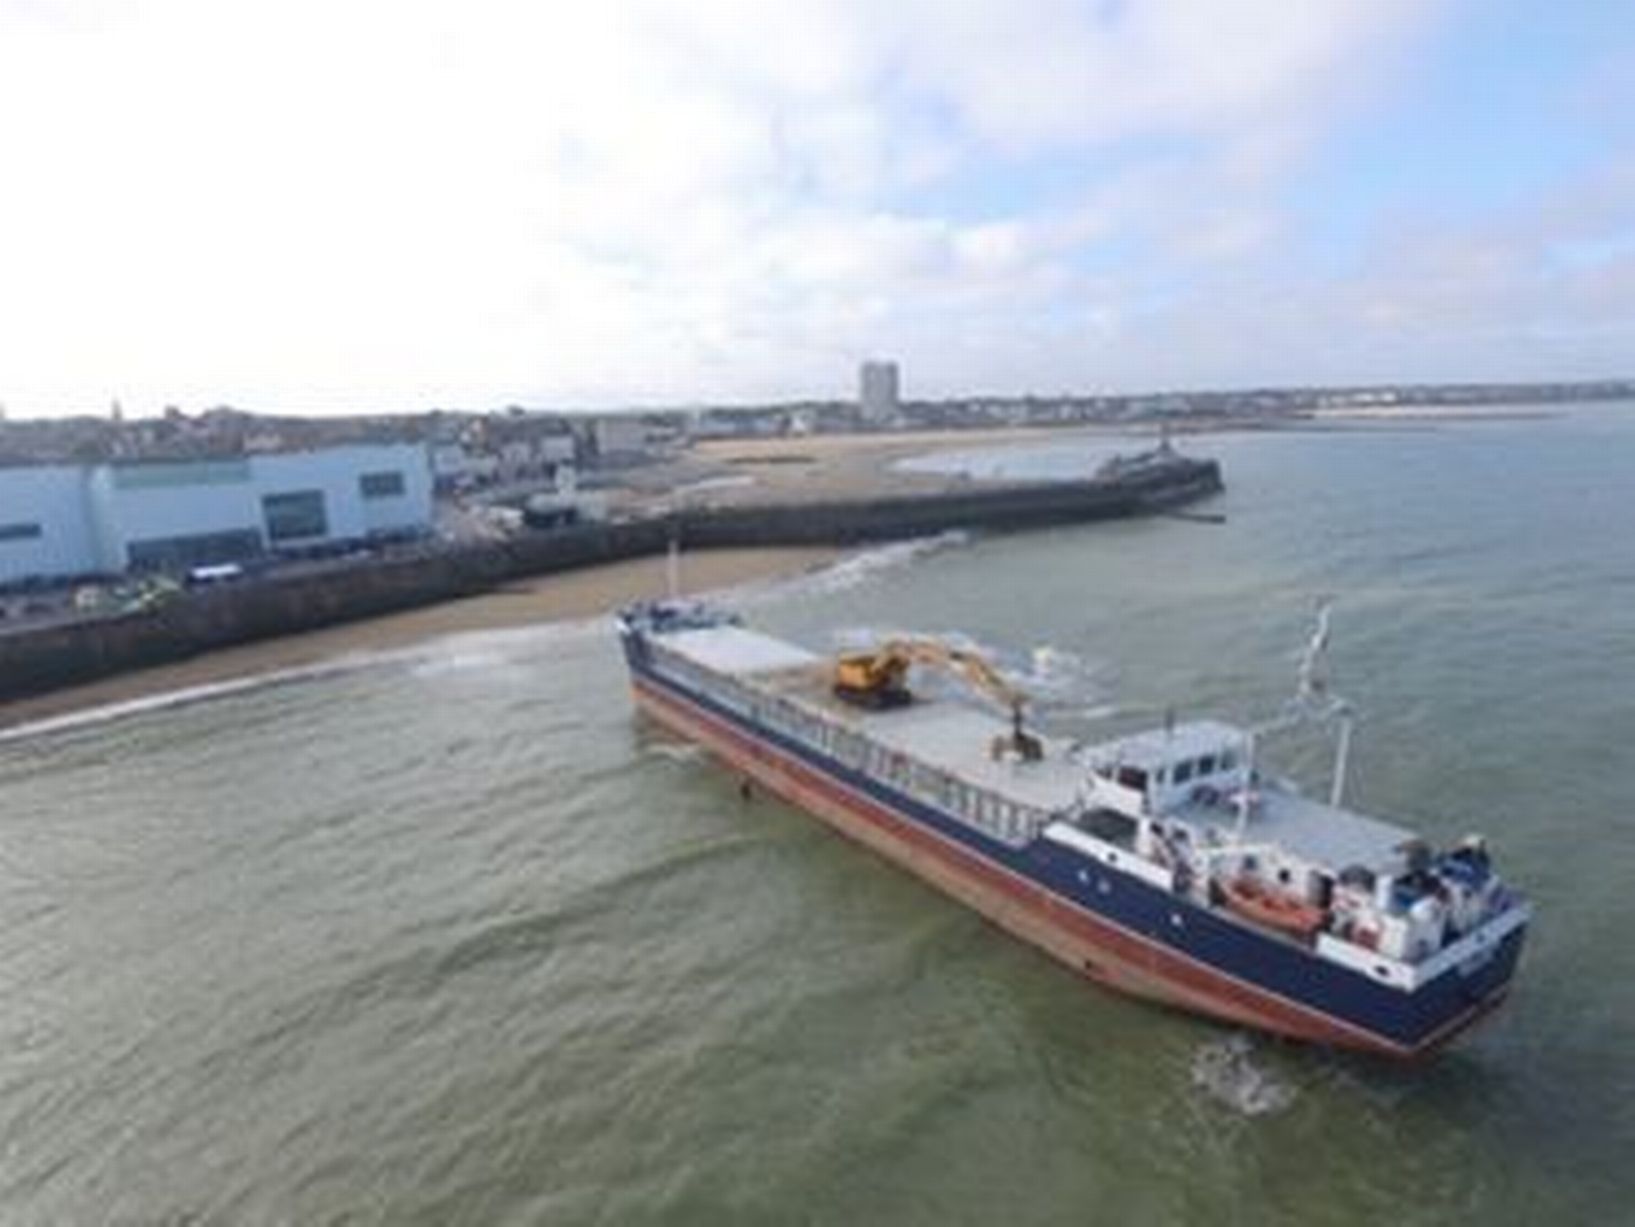 Ship aground photo